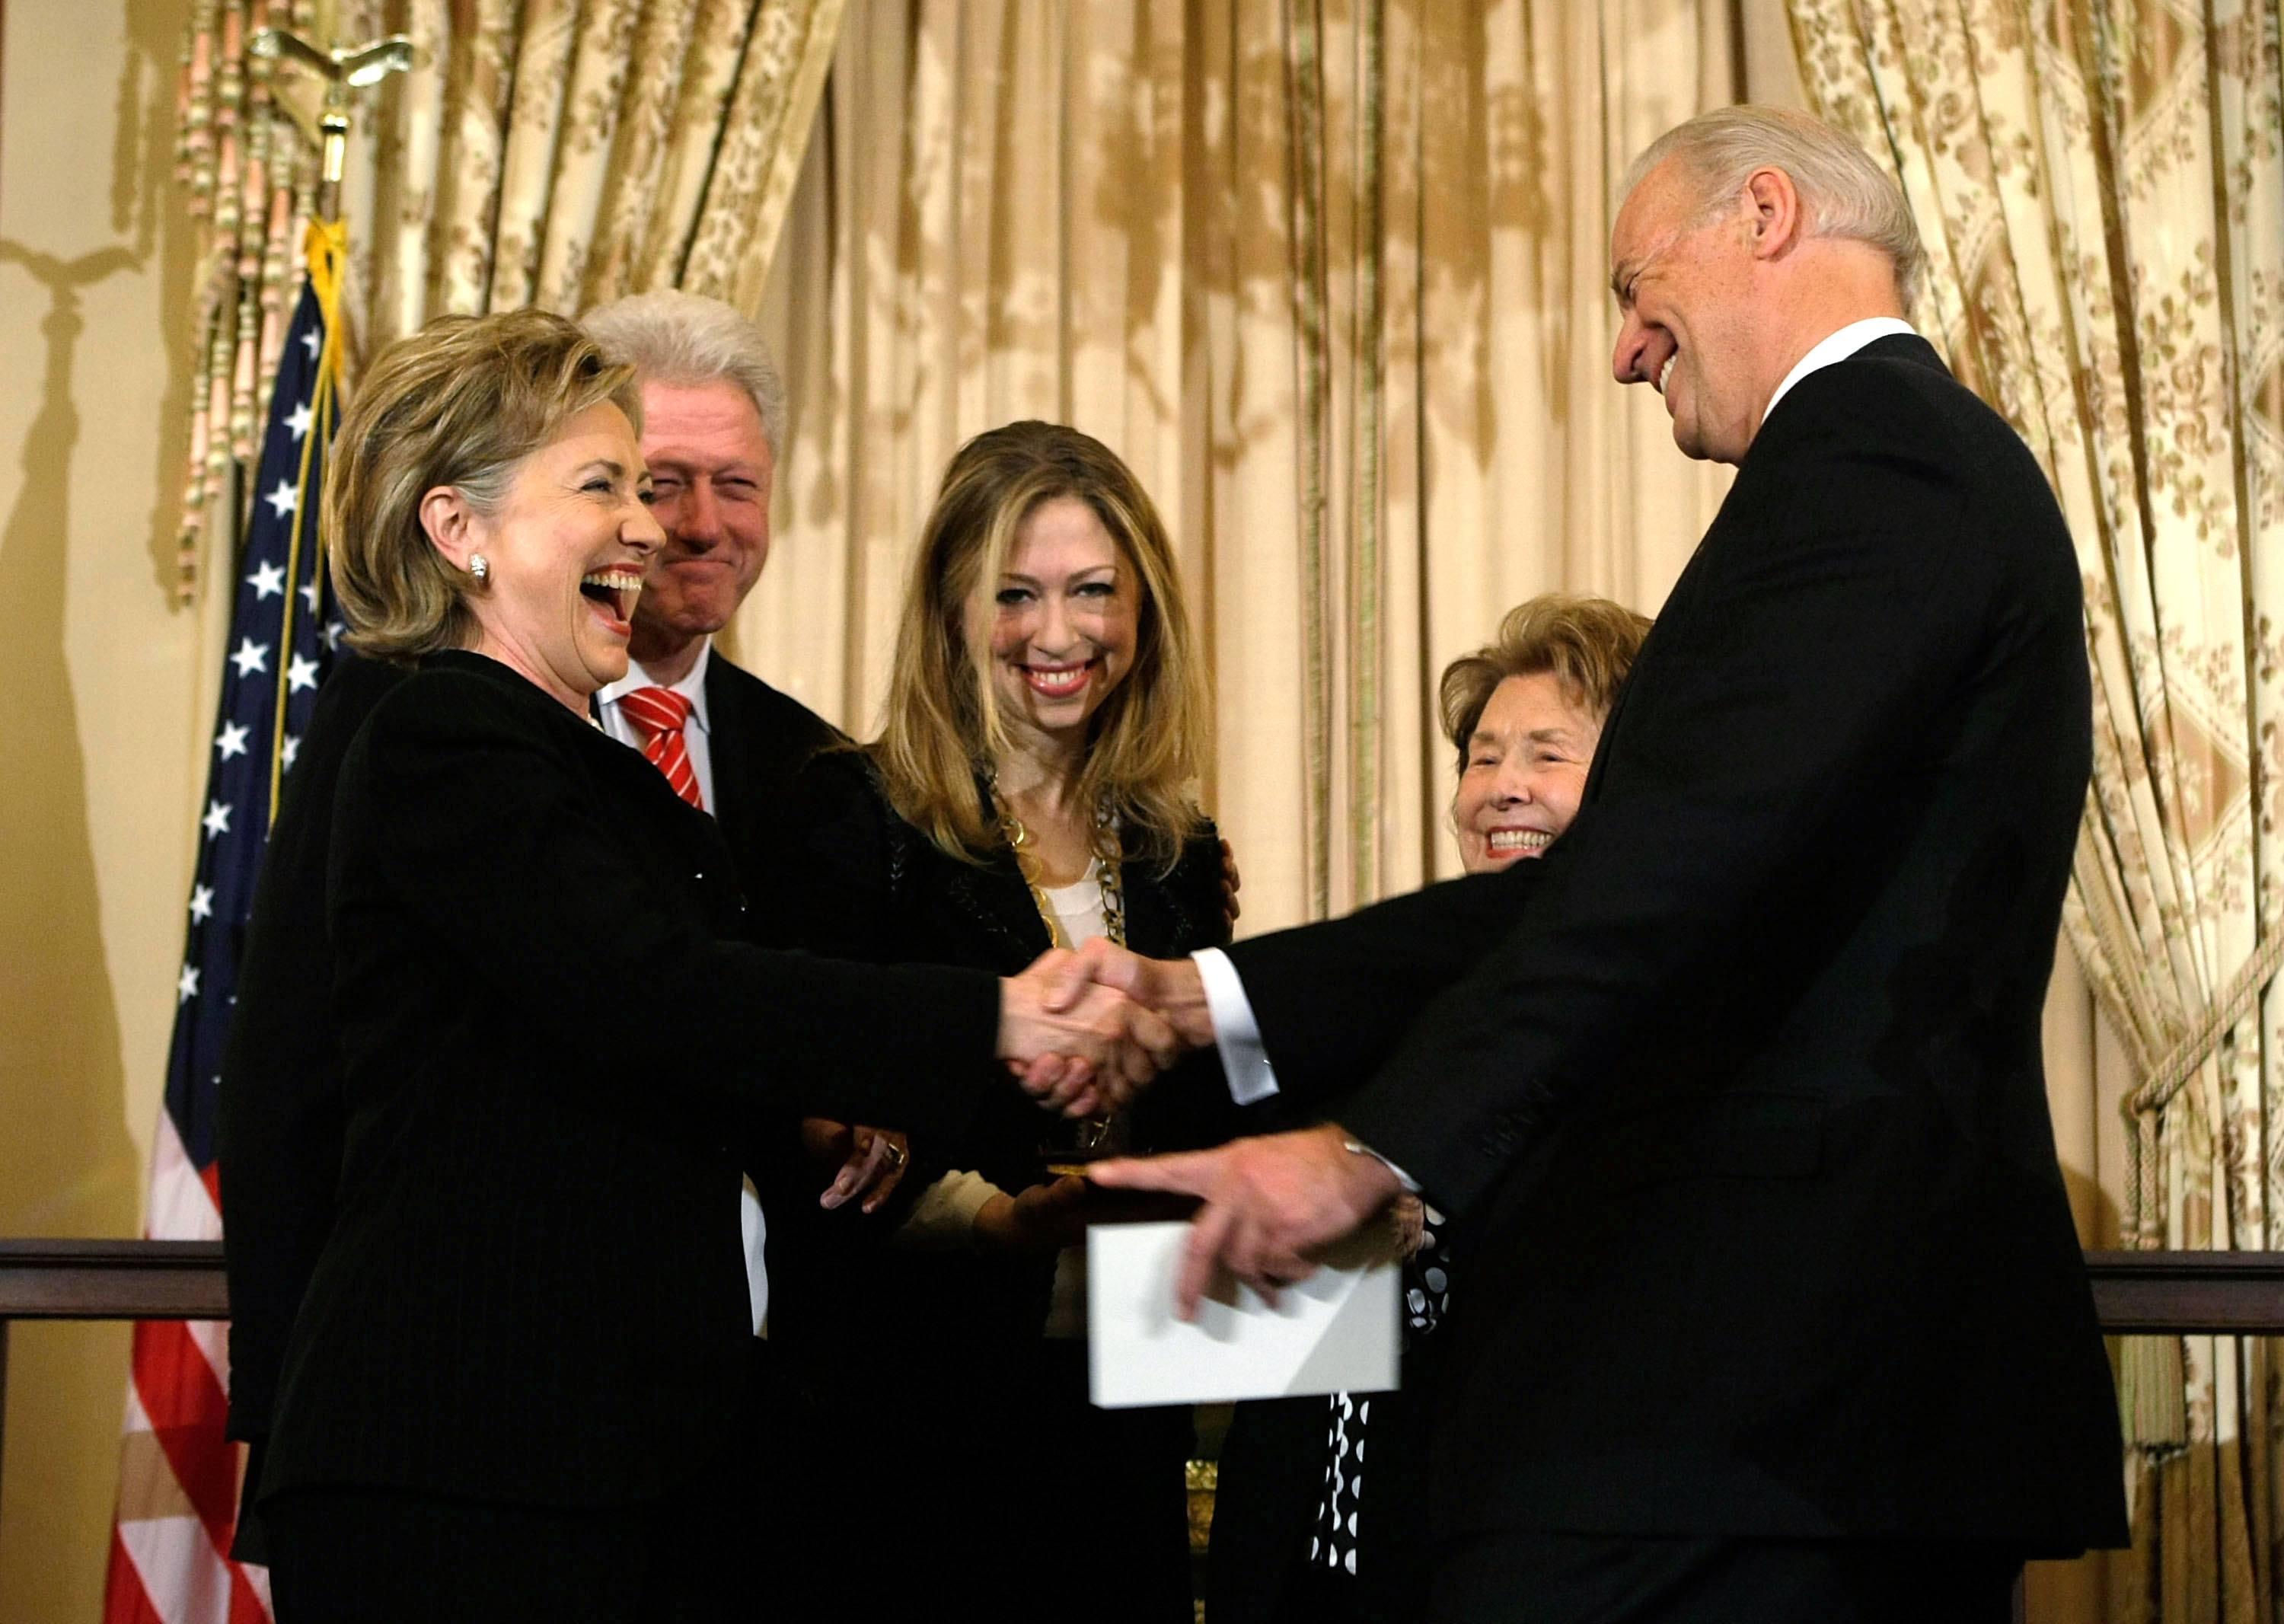 Hillary Clinton is sworn in as Secretary of State